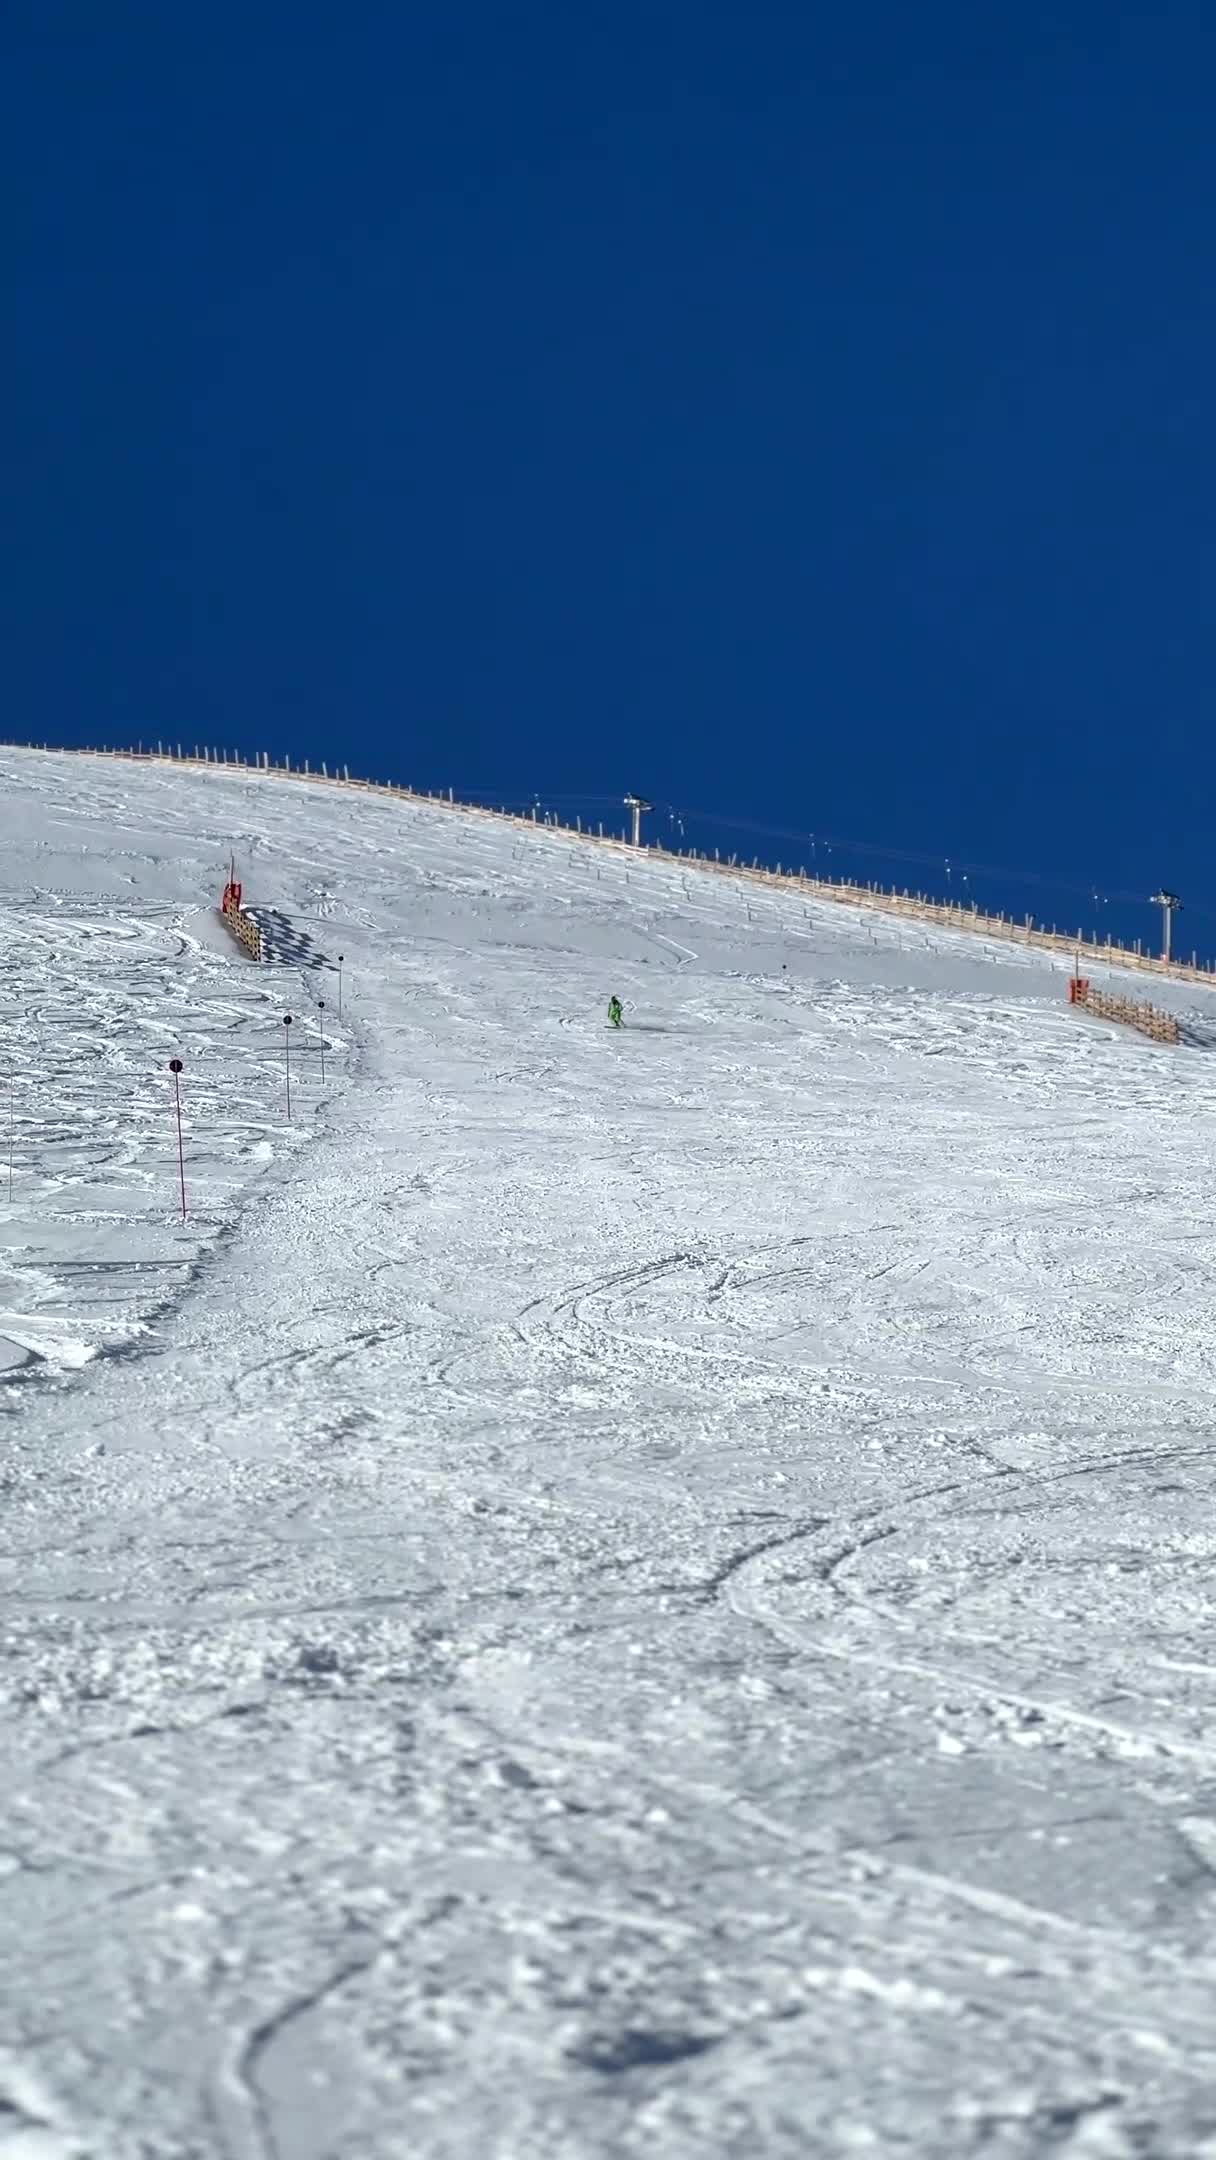 Hilarious Ski Fail